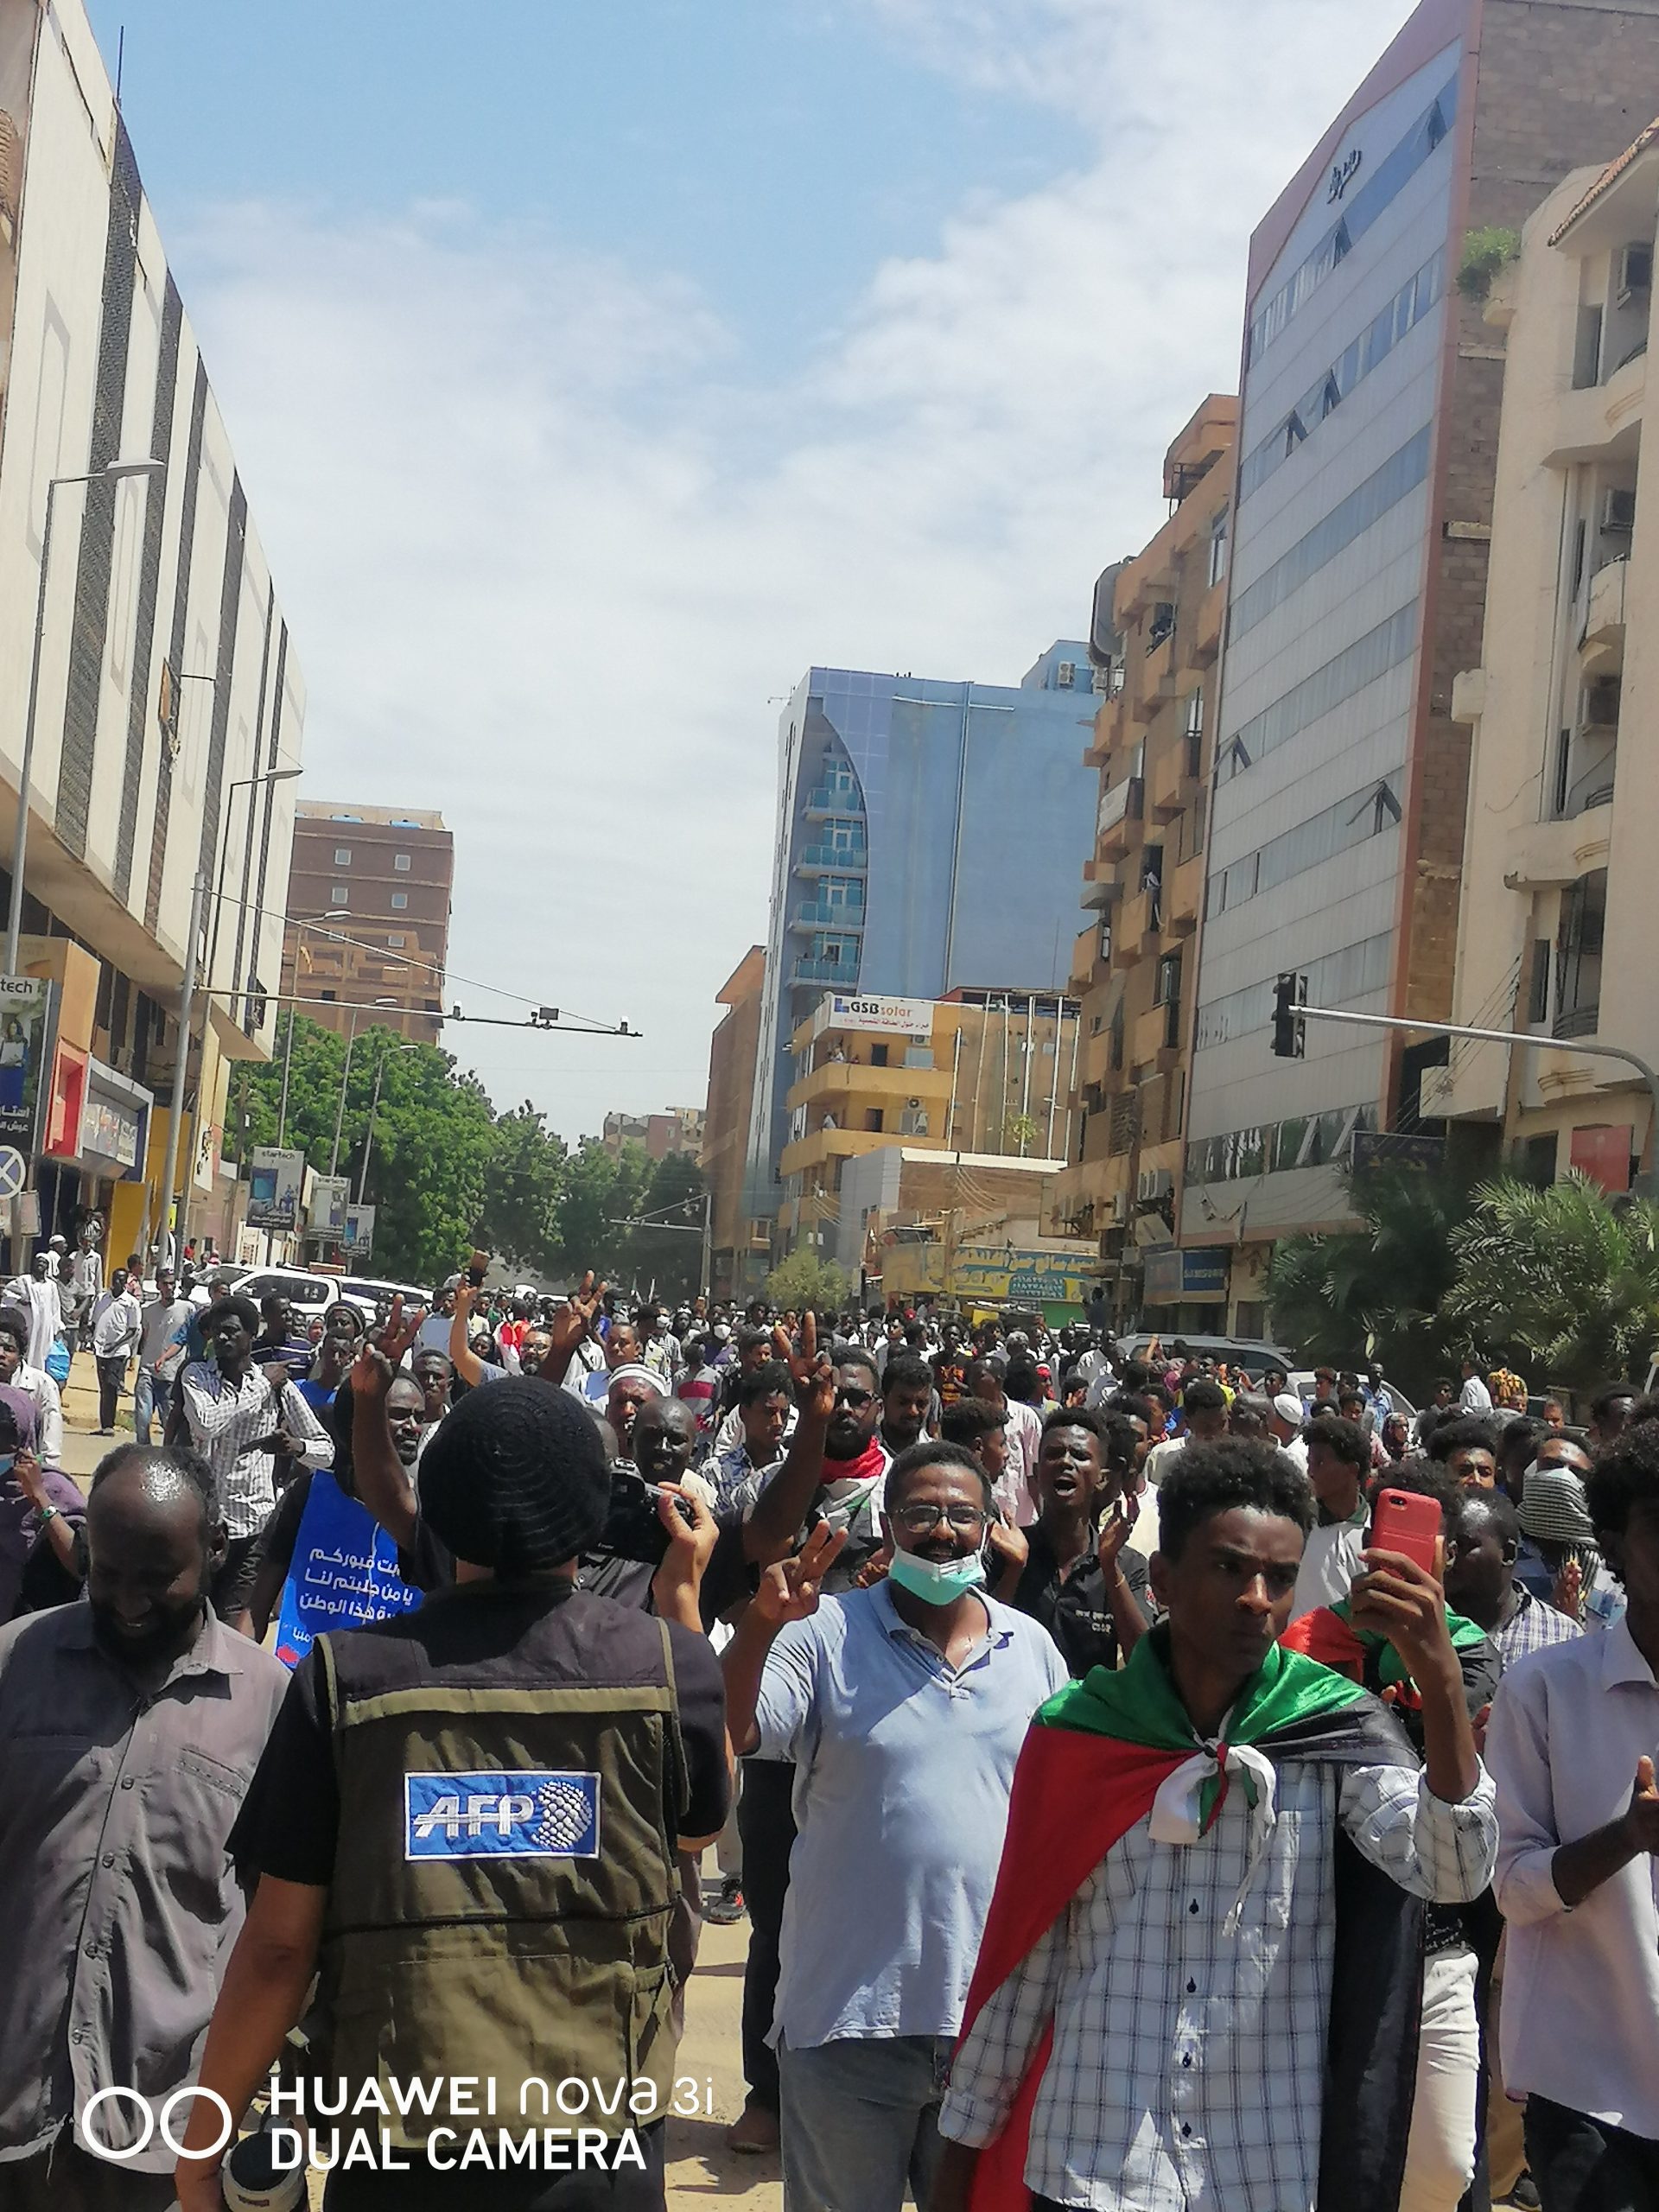 SUDANESE POLICE DISPERSES INFRONT OF CABINET HQ, SPA ANNOUNCES OPEN ESCLATION